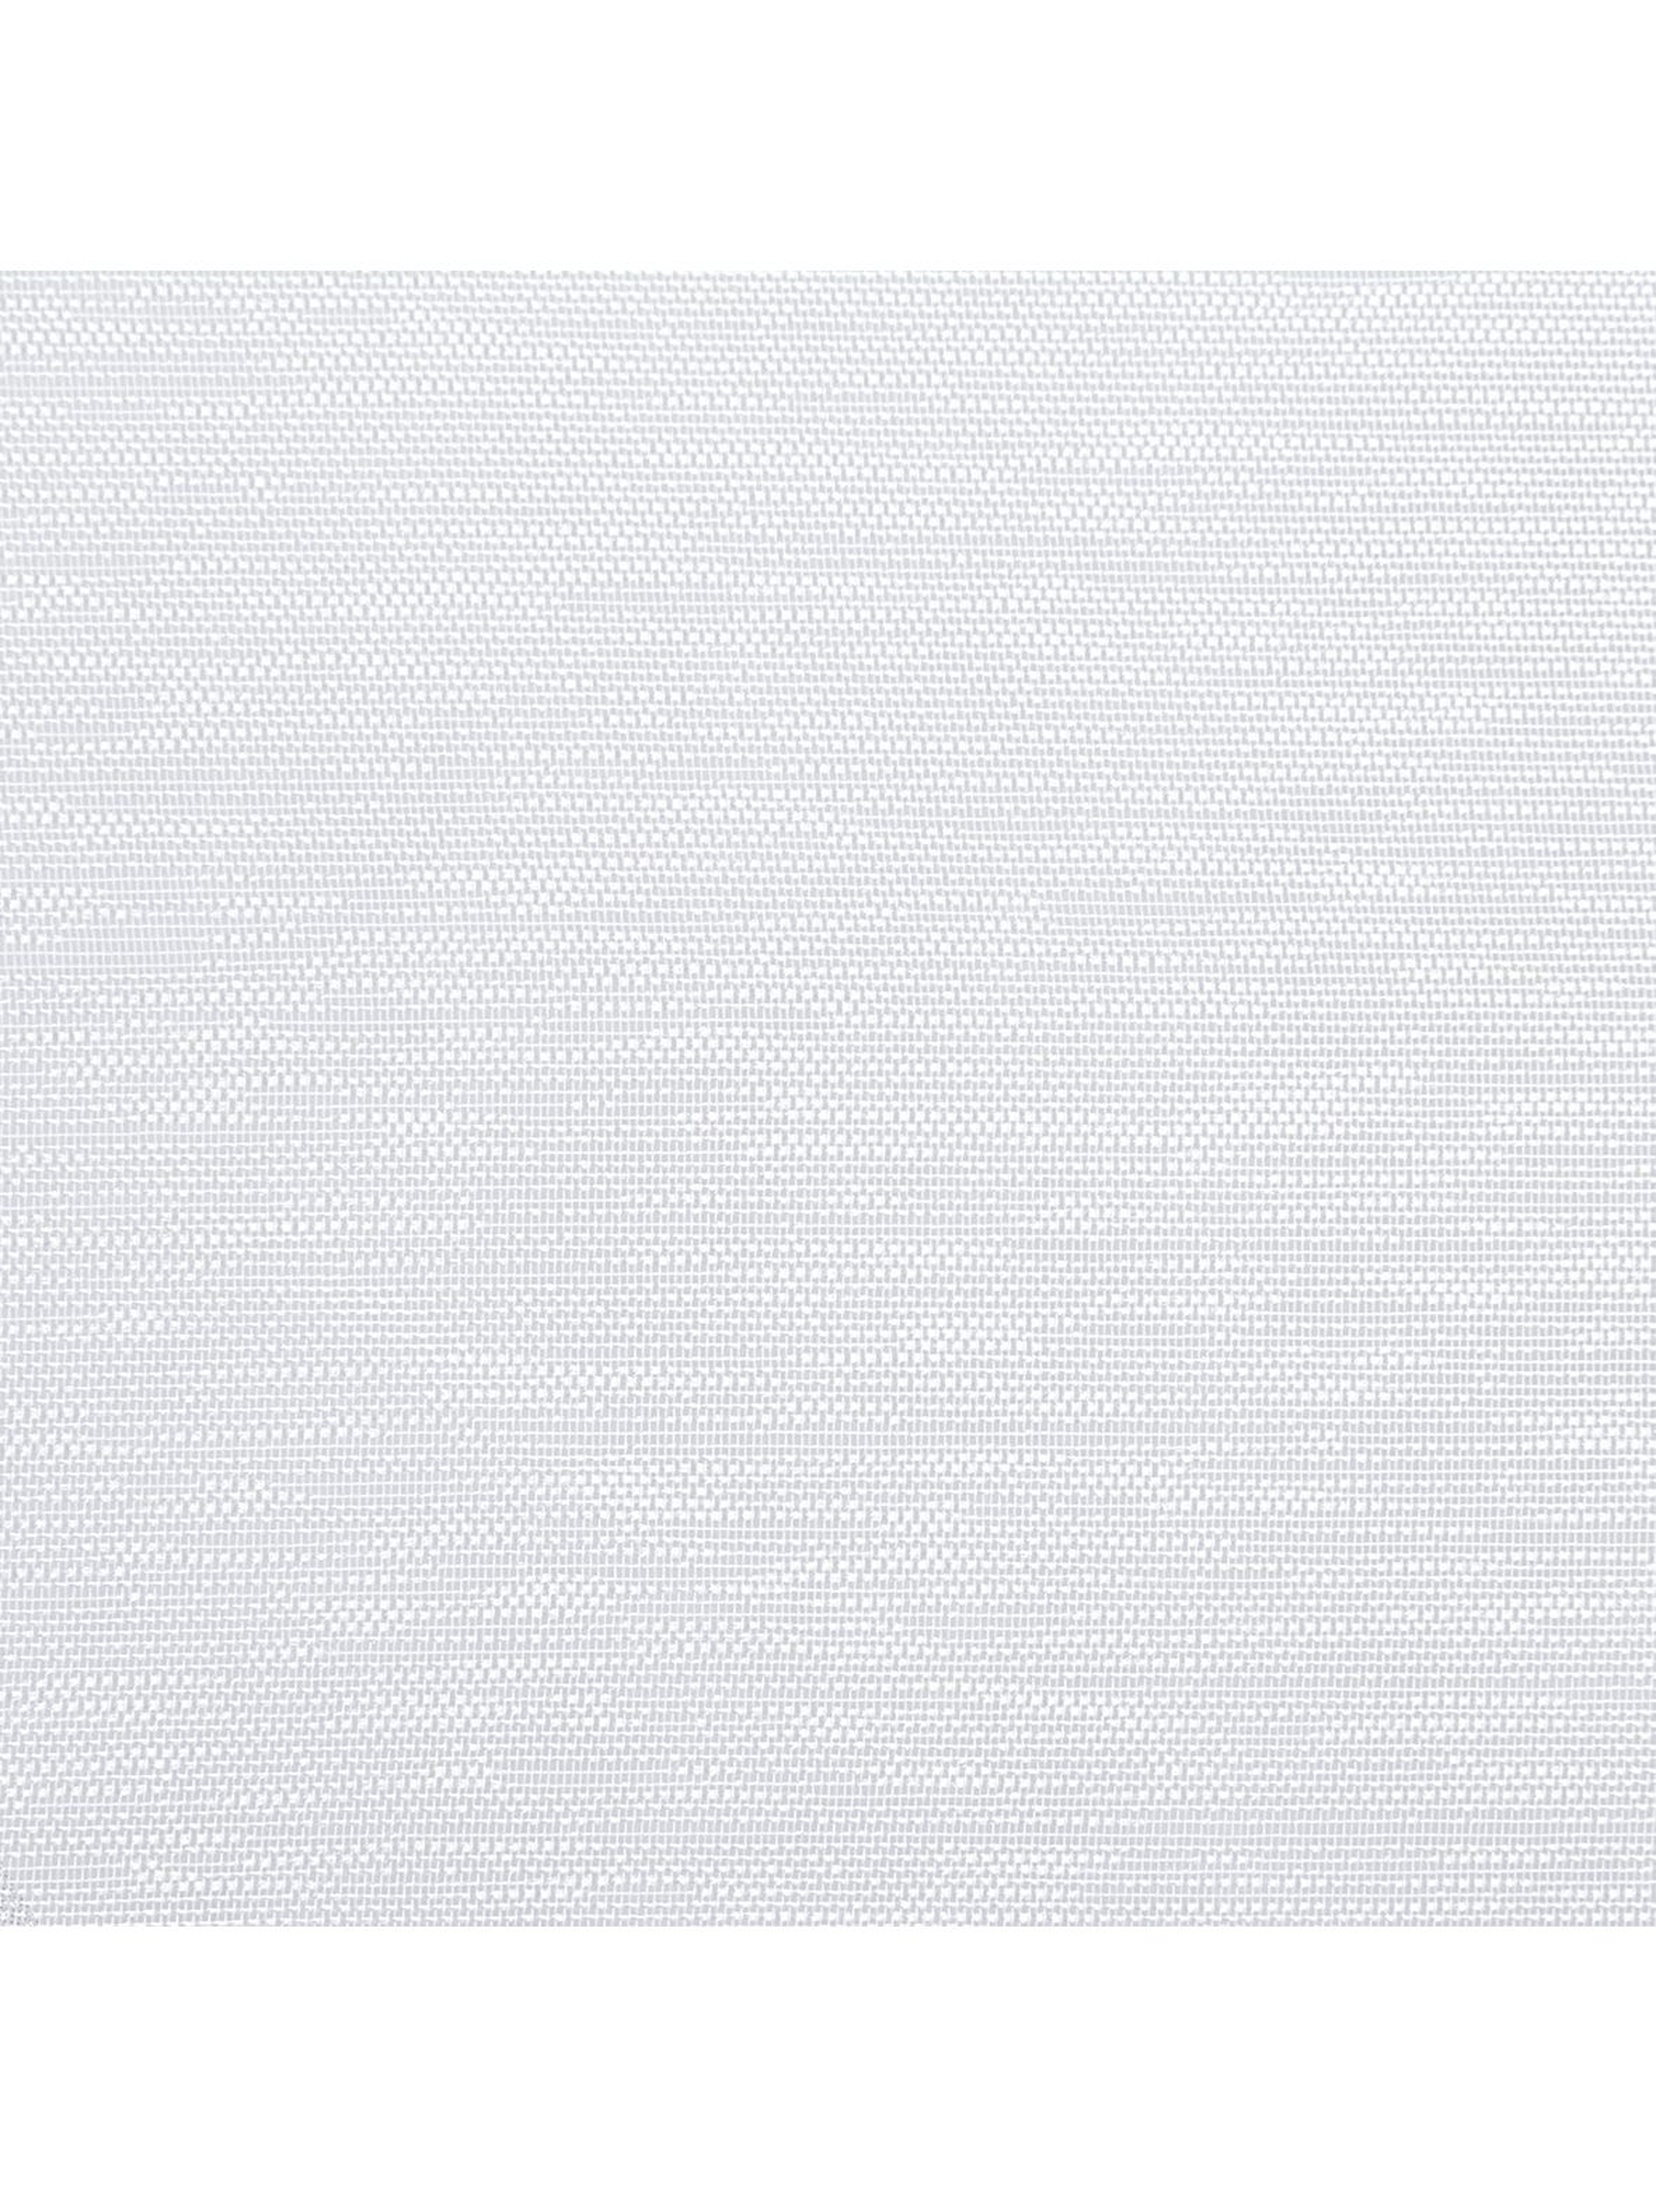 Firana gładka biała 140 x 250 cm